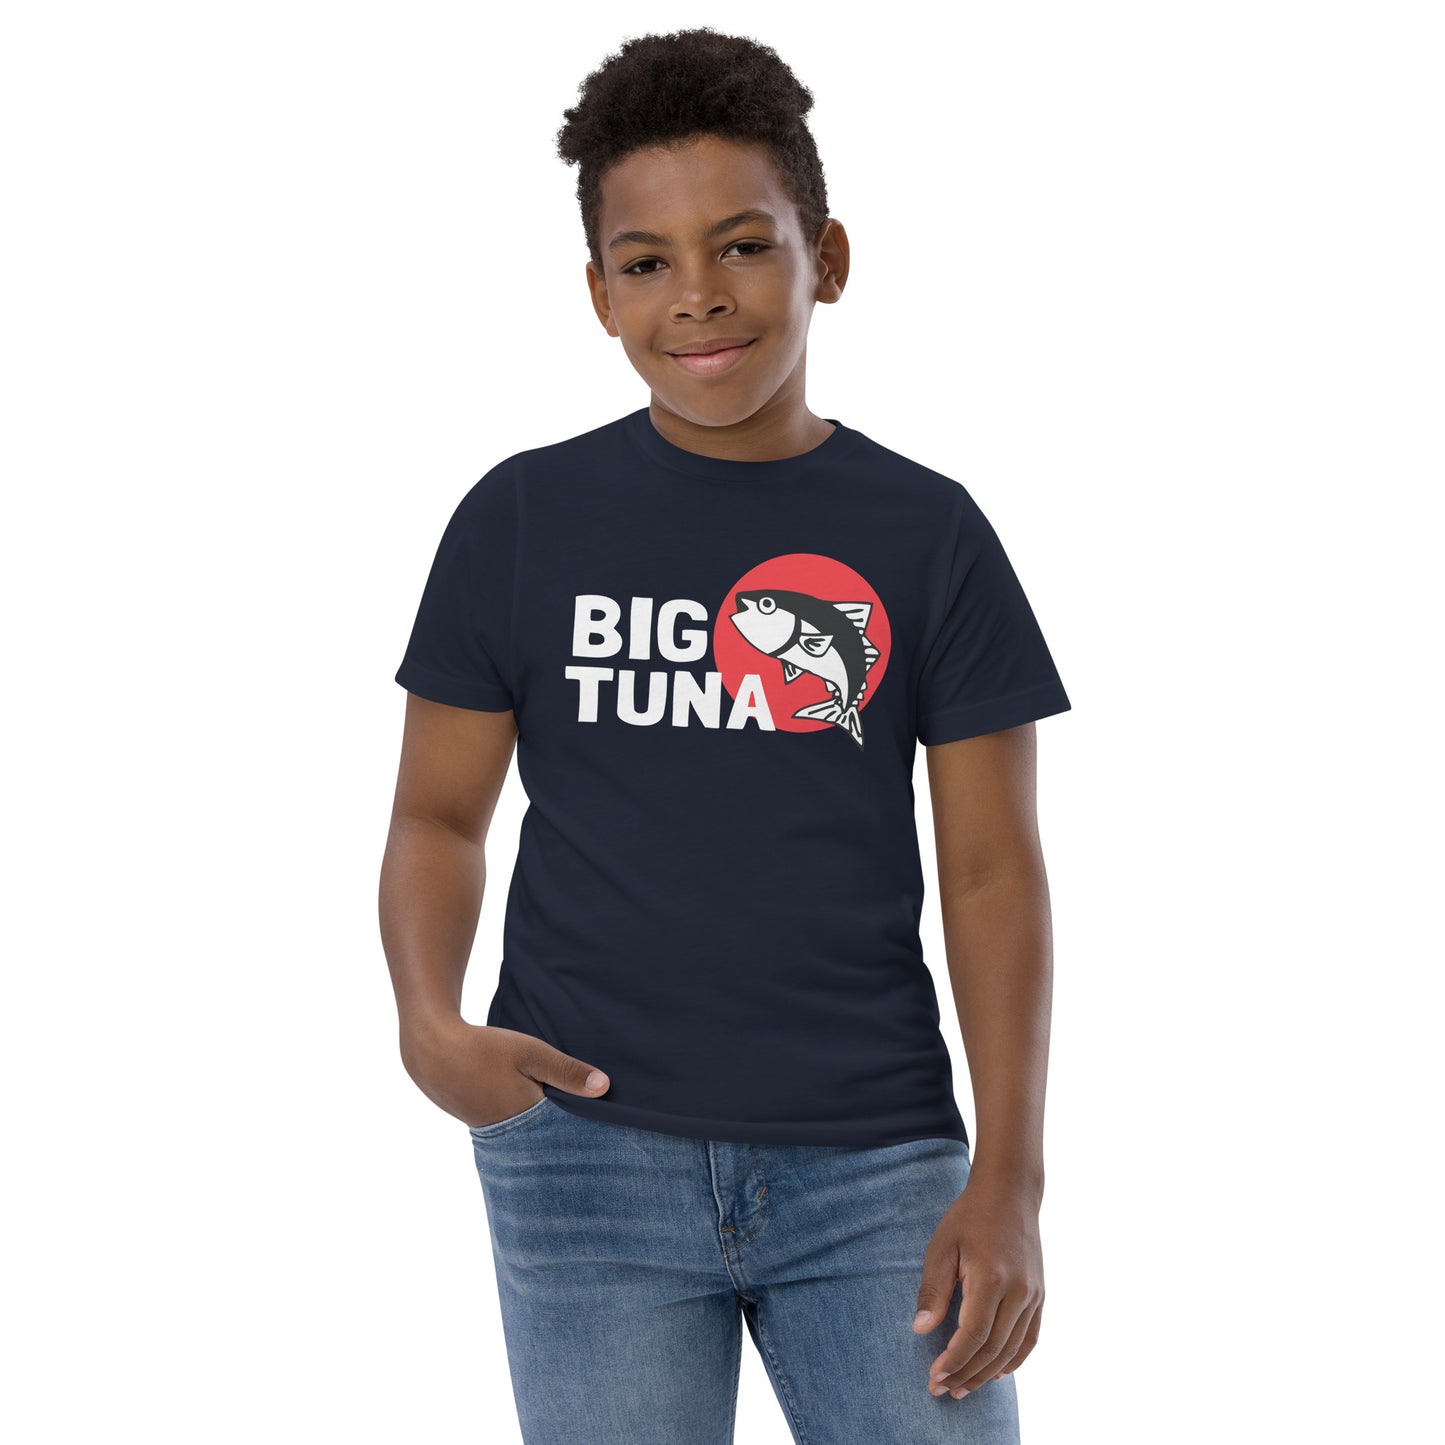 Big Tuna Youth T-shirt